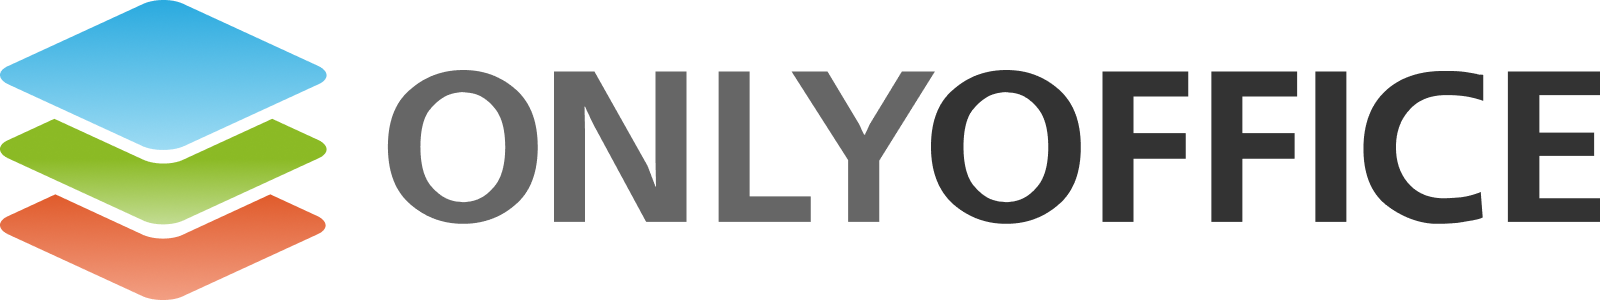 logo_onlyoffice